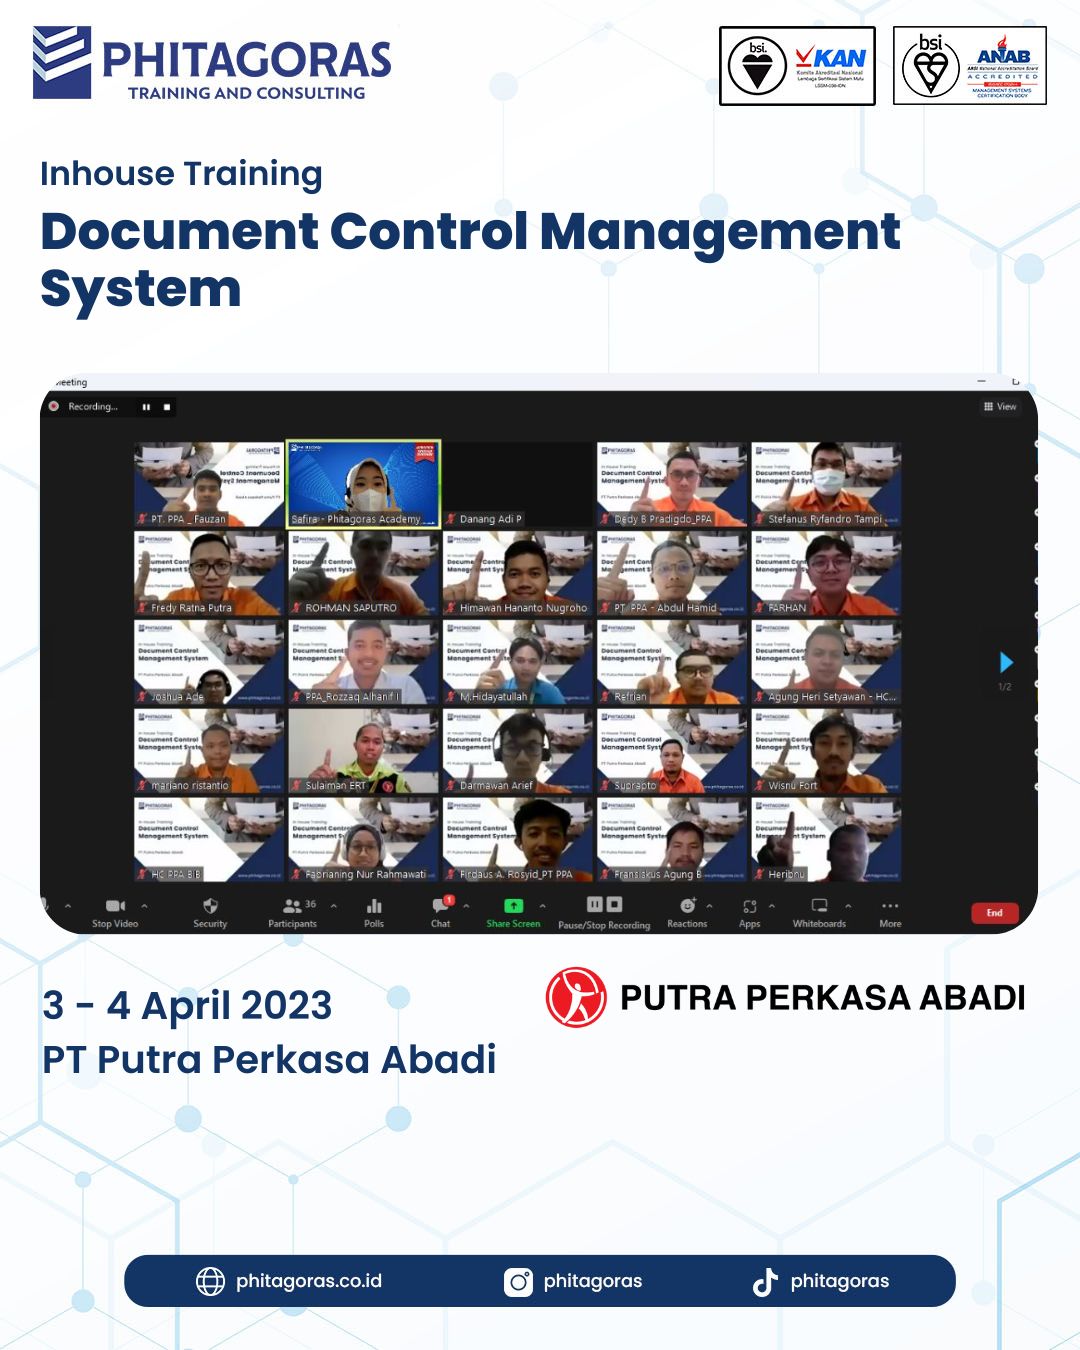 Inhouse Training Document Control Management System - PT Putra Perkasa Abadi